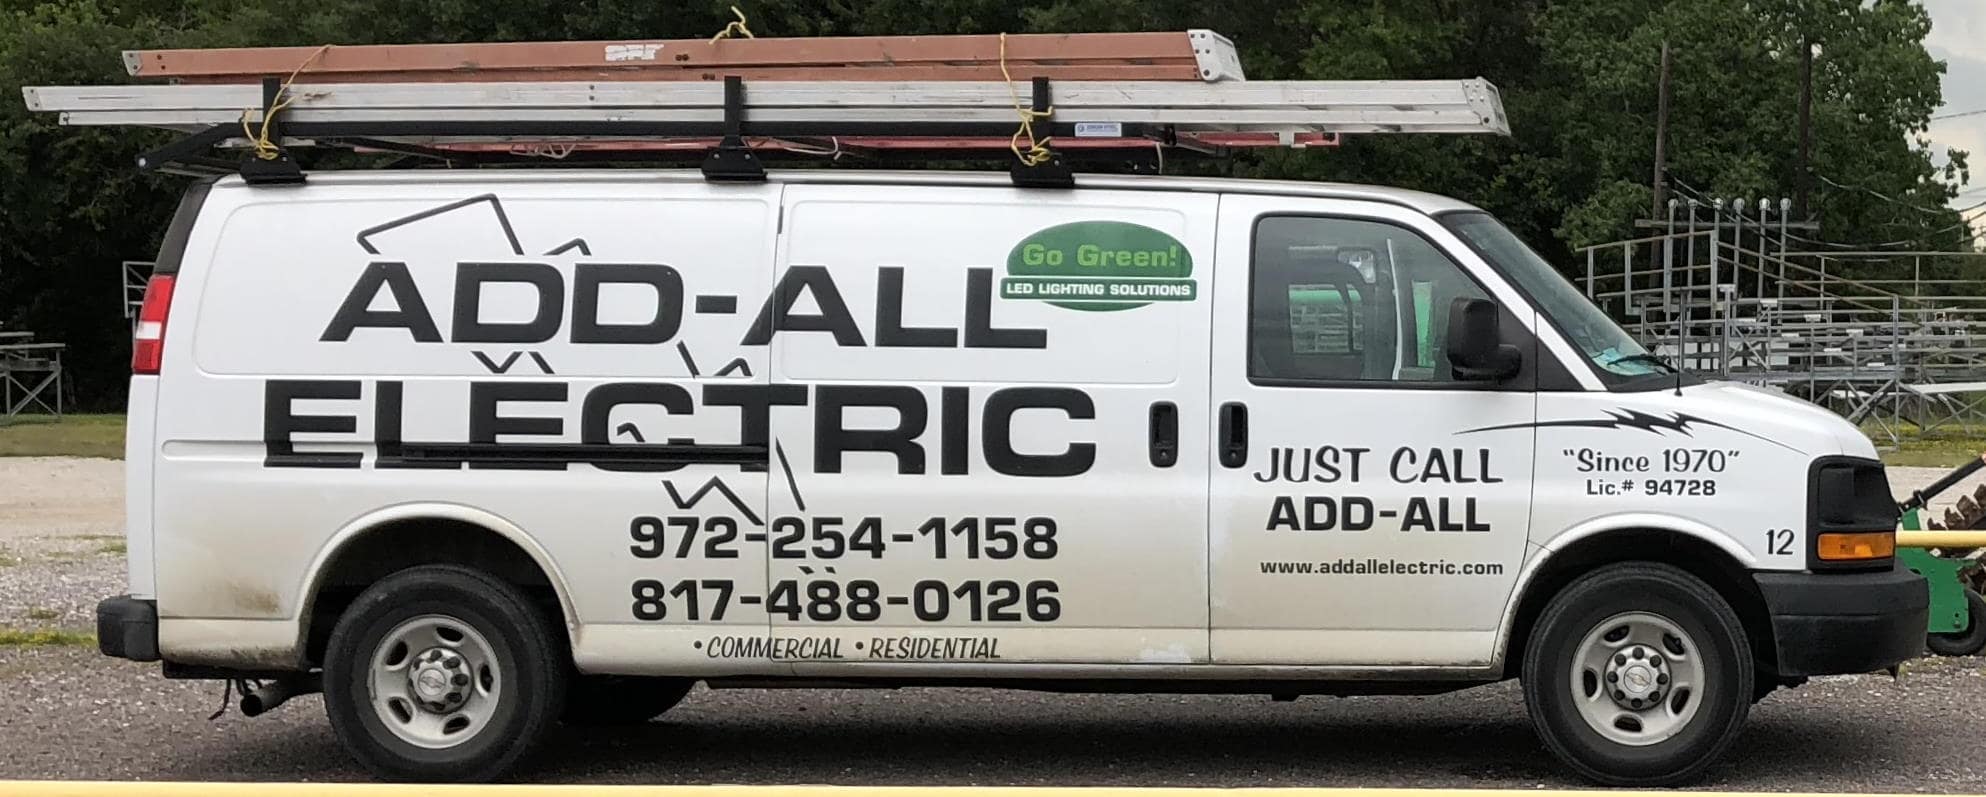 Add-All Electric Service Van